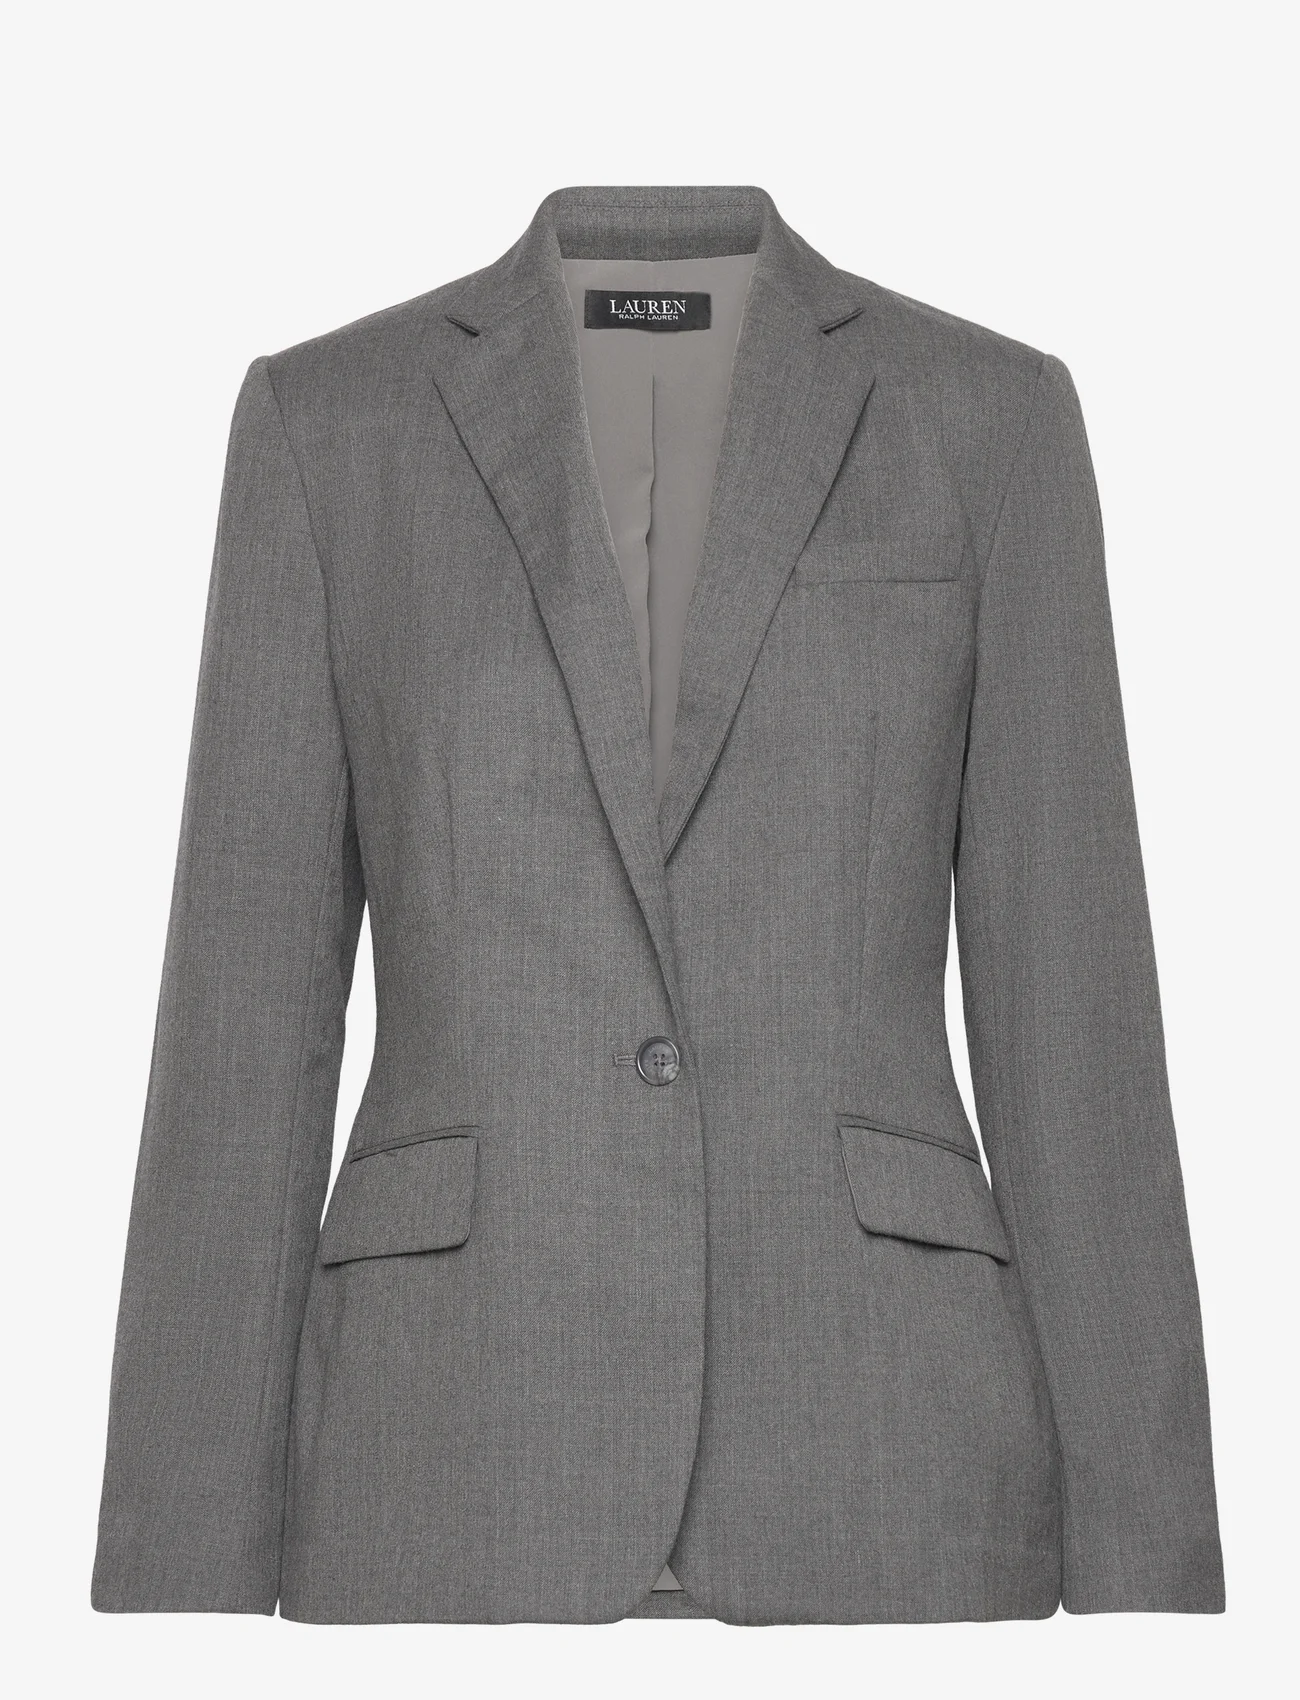 Lauren Ralph Lauren - Wool Twill Blazer - vakarėlių drabužiai išparduotuvių kainomis - modern grey heath - 0